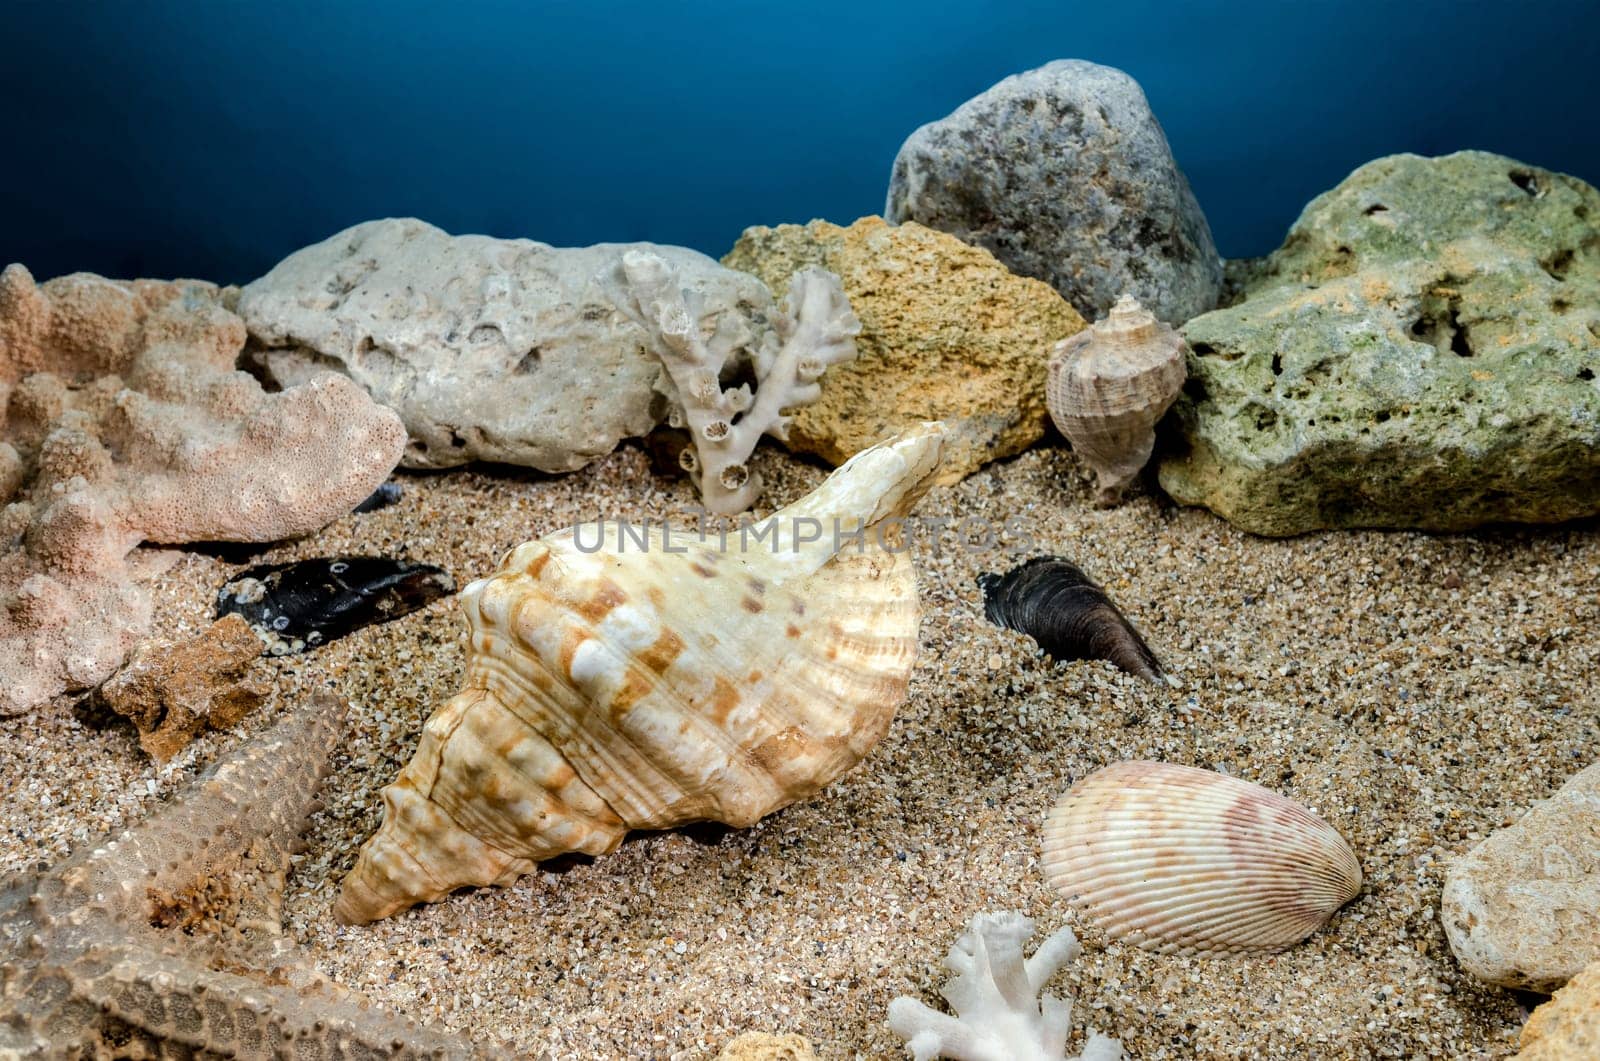 Pleuroploca trapezium sea snail shell Cassis Tuberosa on a sand underwater